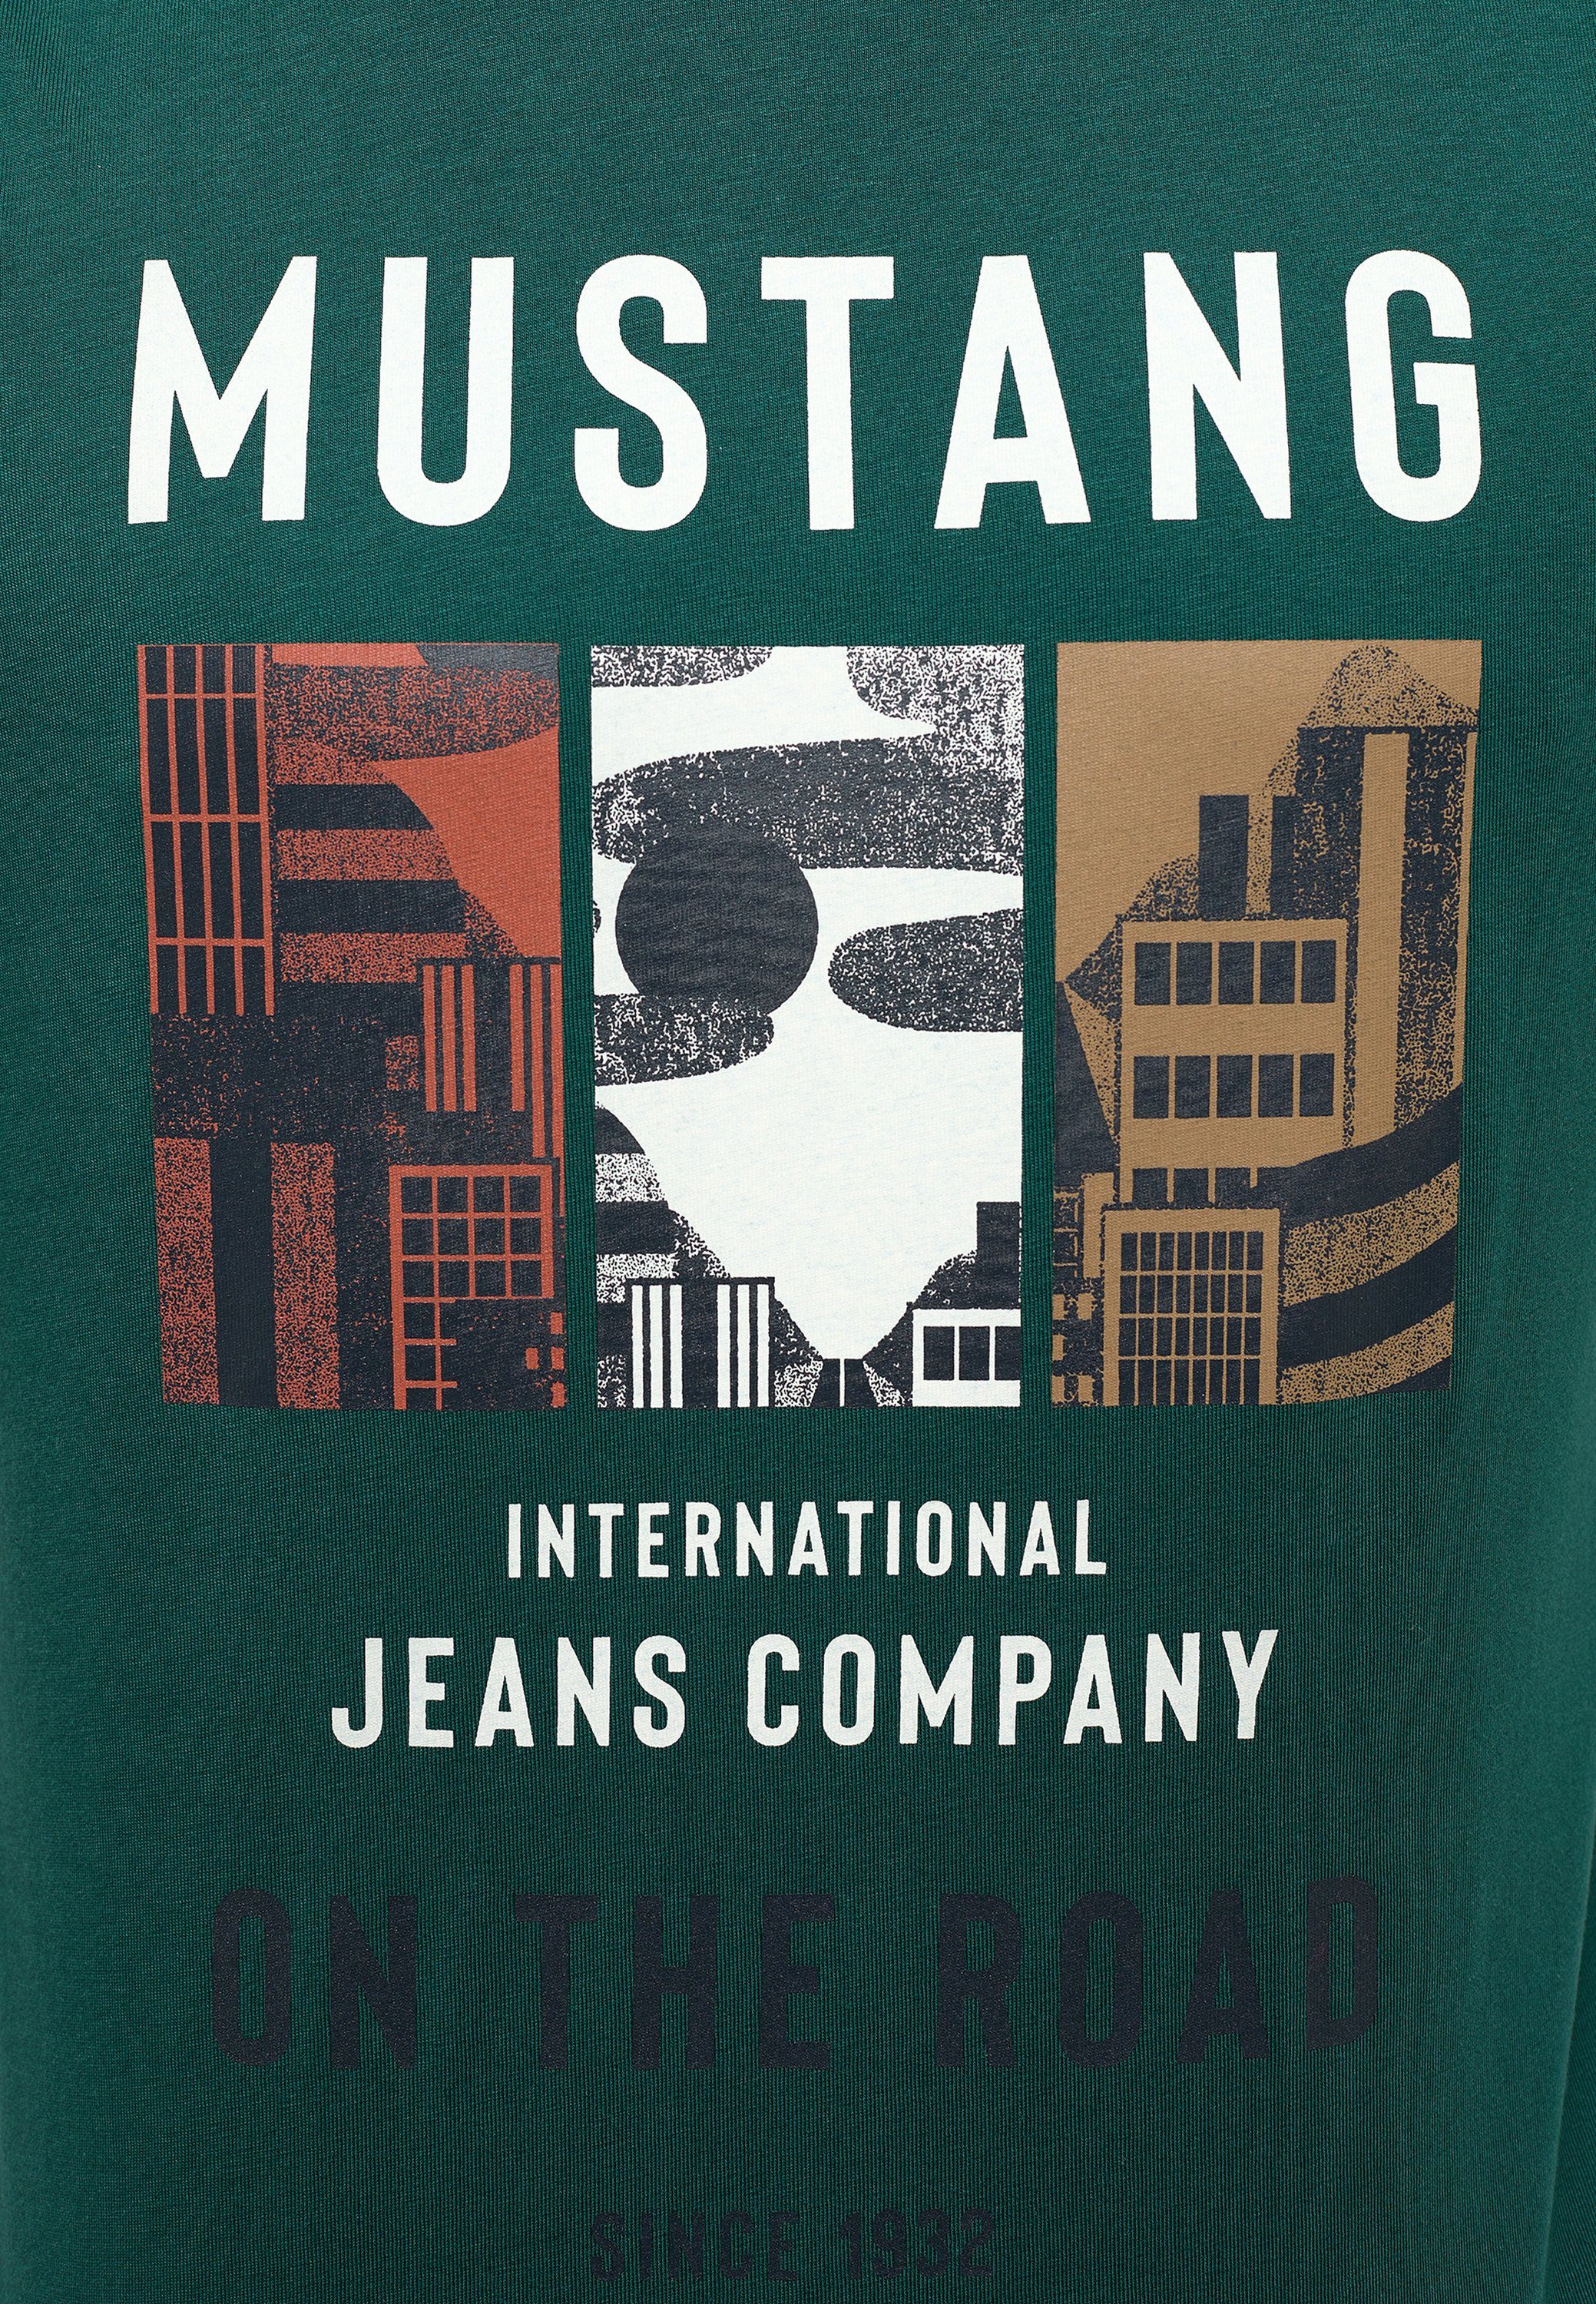 Mustang Print-Shirt MUSTANG grün Kurzarmshirt